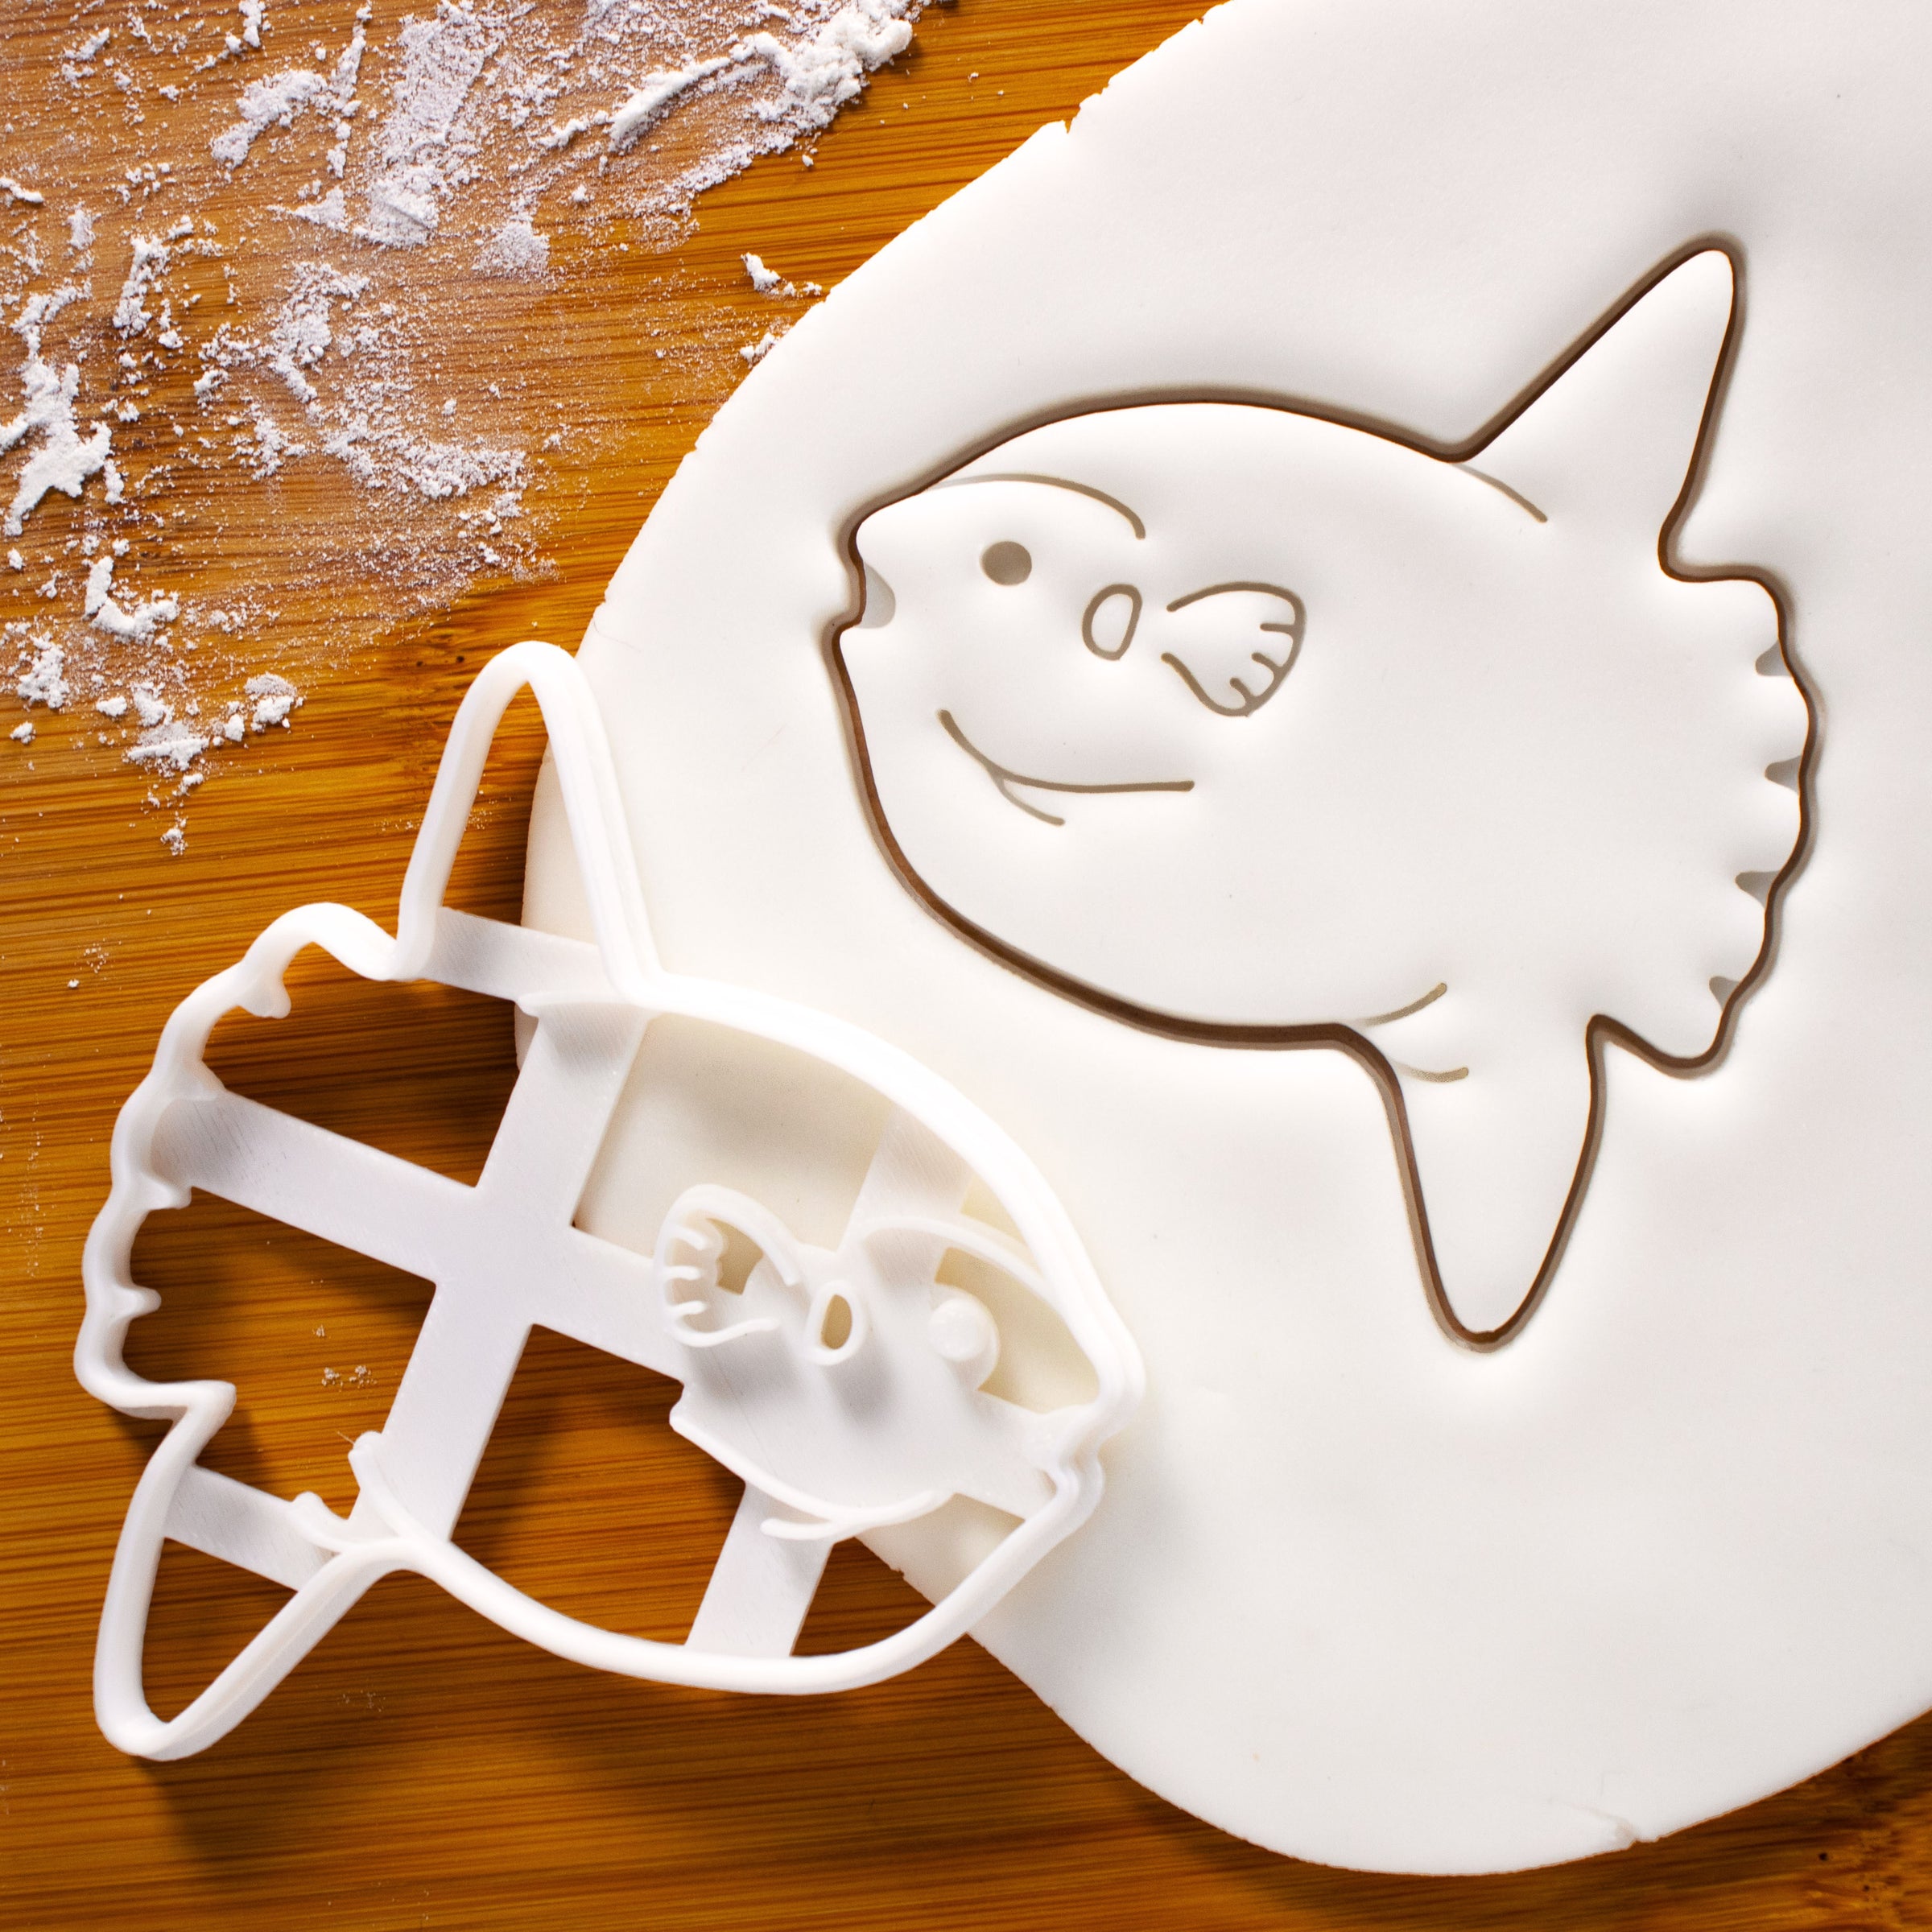 Sunfish cookie cutter